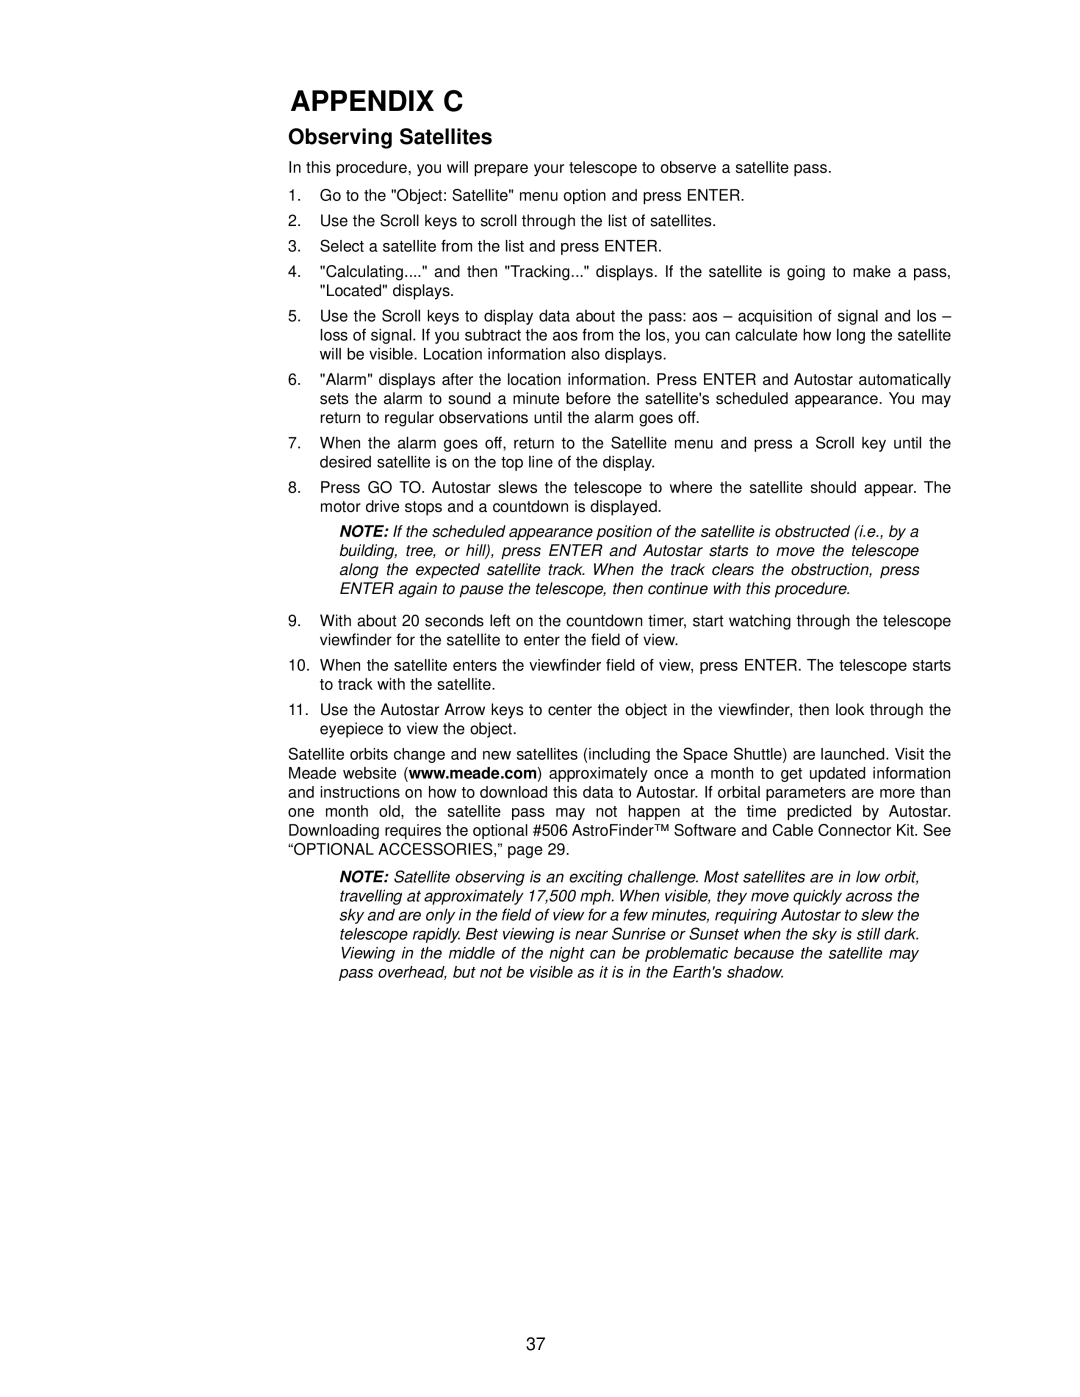 Meade DS-2000 instruction manual Appendix C, Observing Satellites 